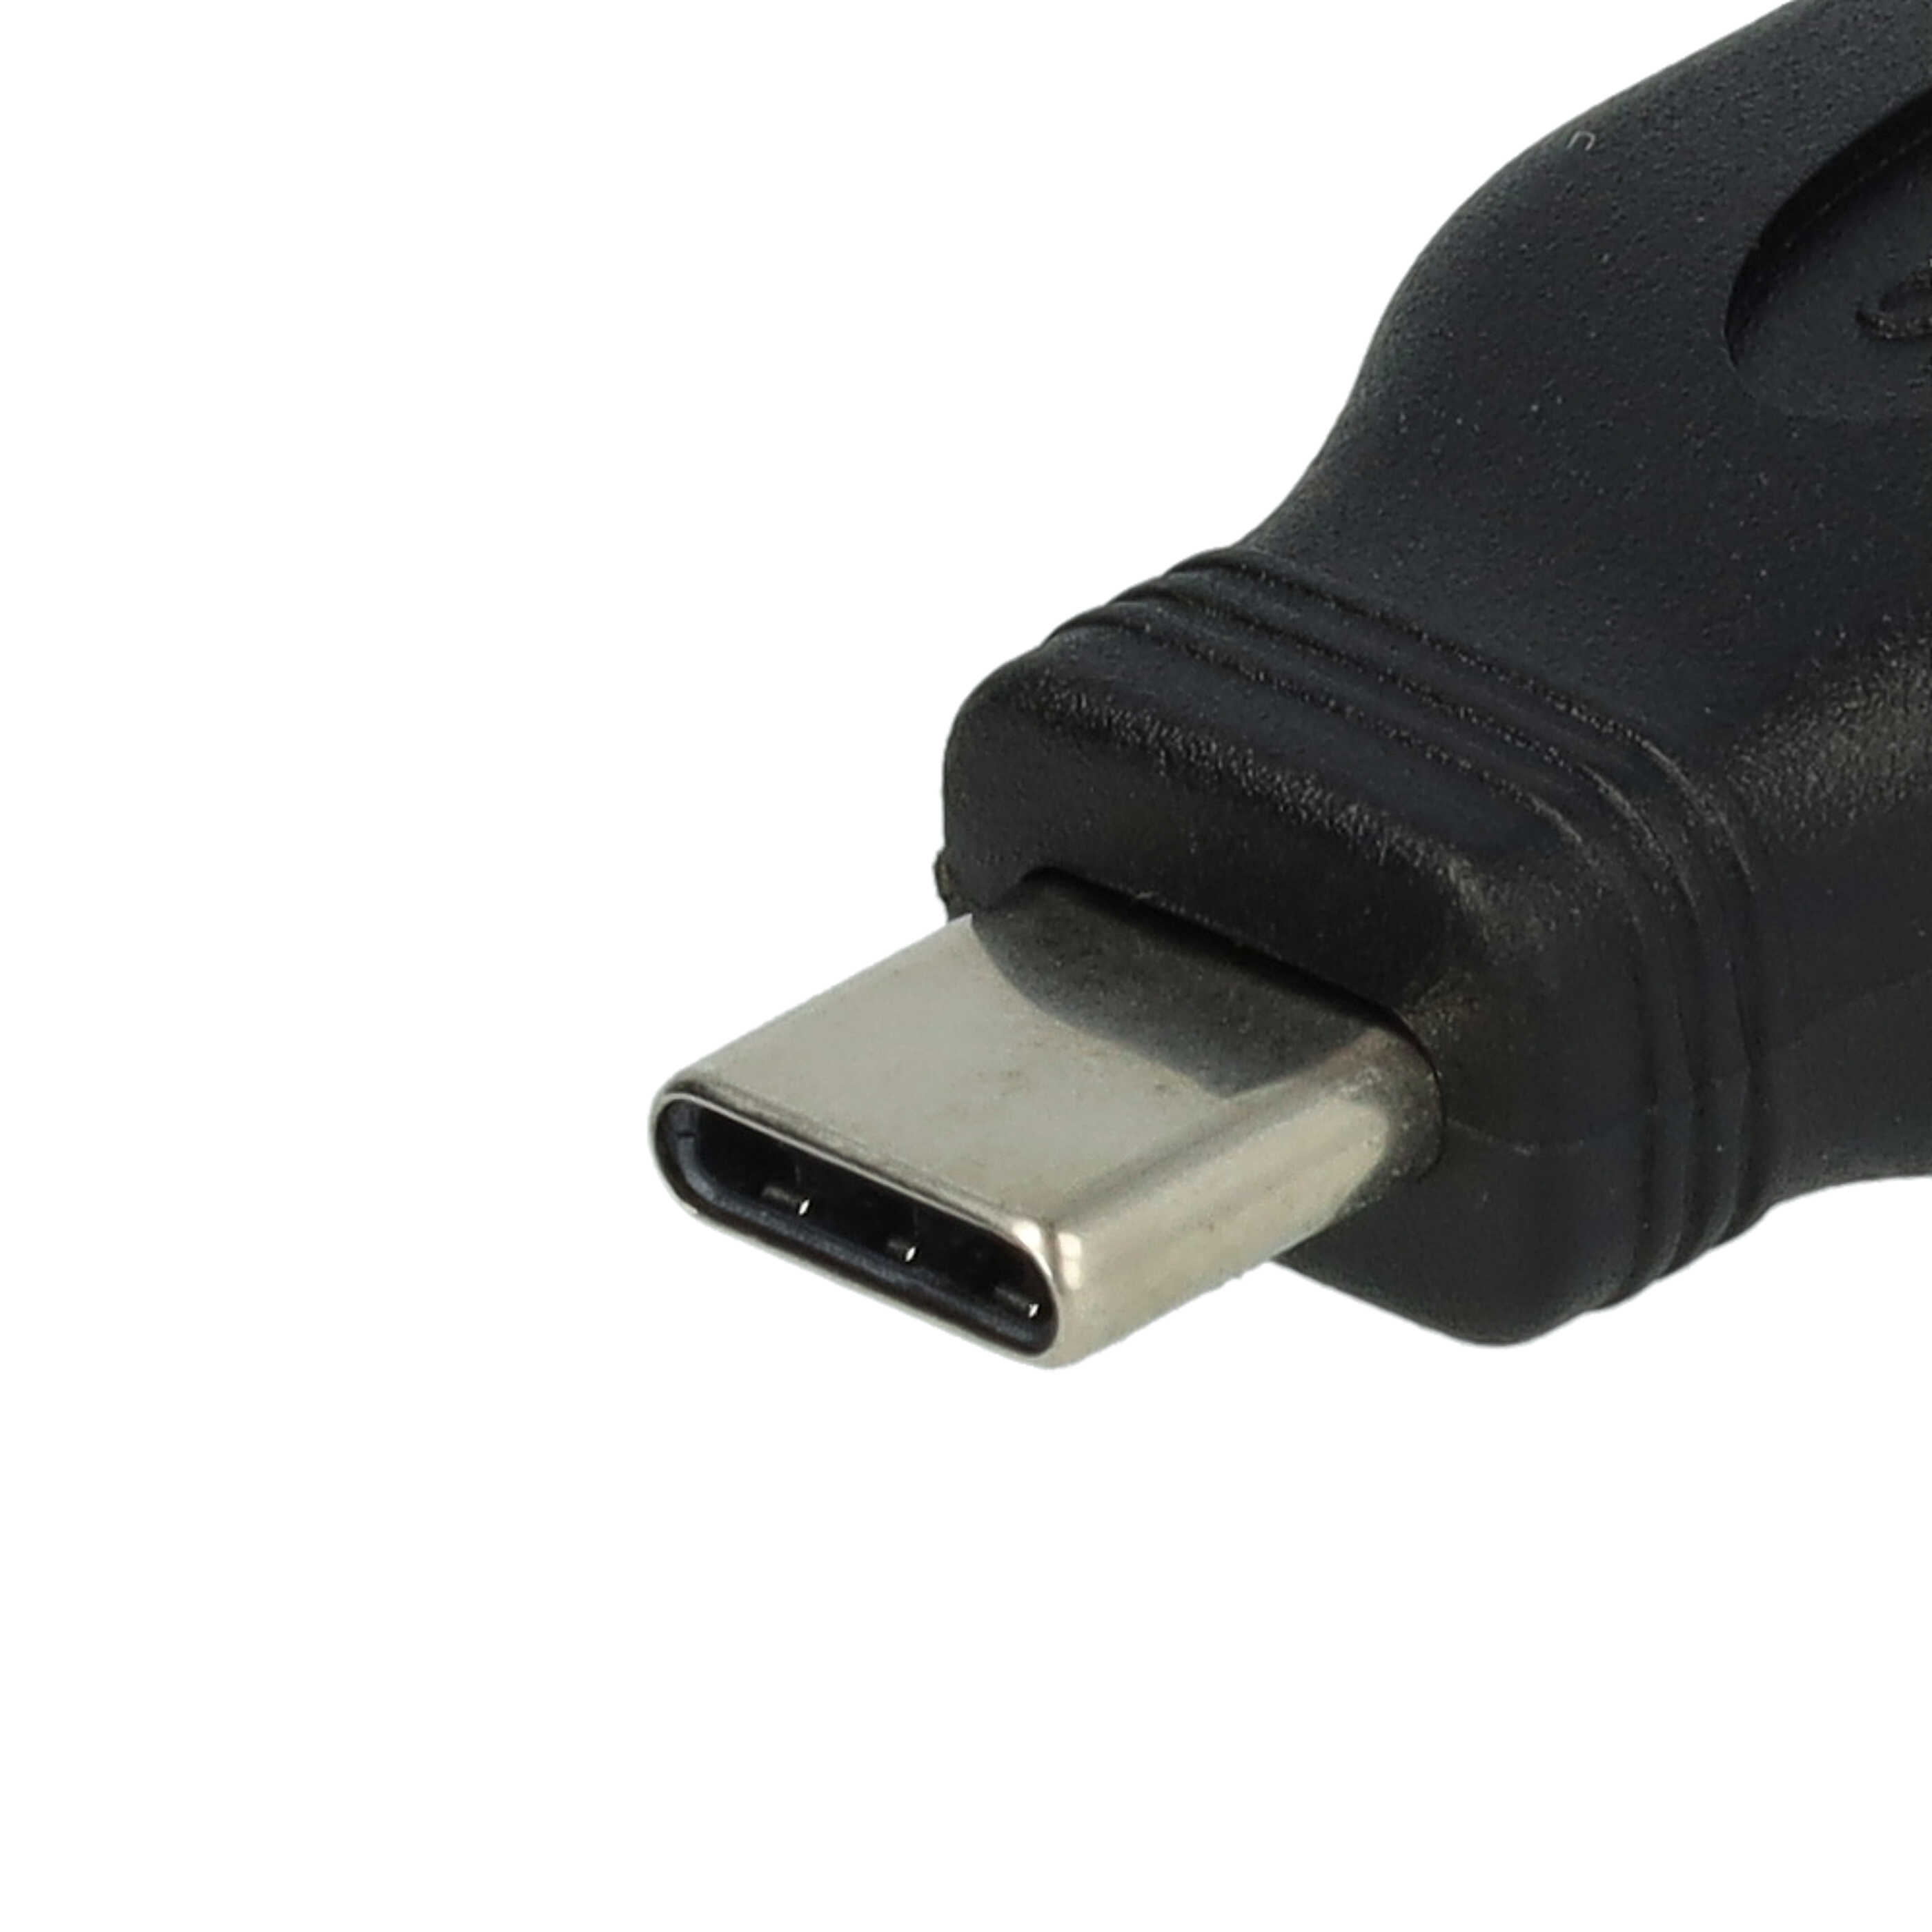 Adaptador USB C a USB 3.0 para smartphone, tablet por ej. compatible con Apple, Samsung Huawei, etc. - USB neg